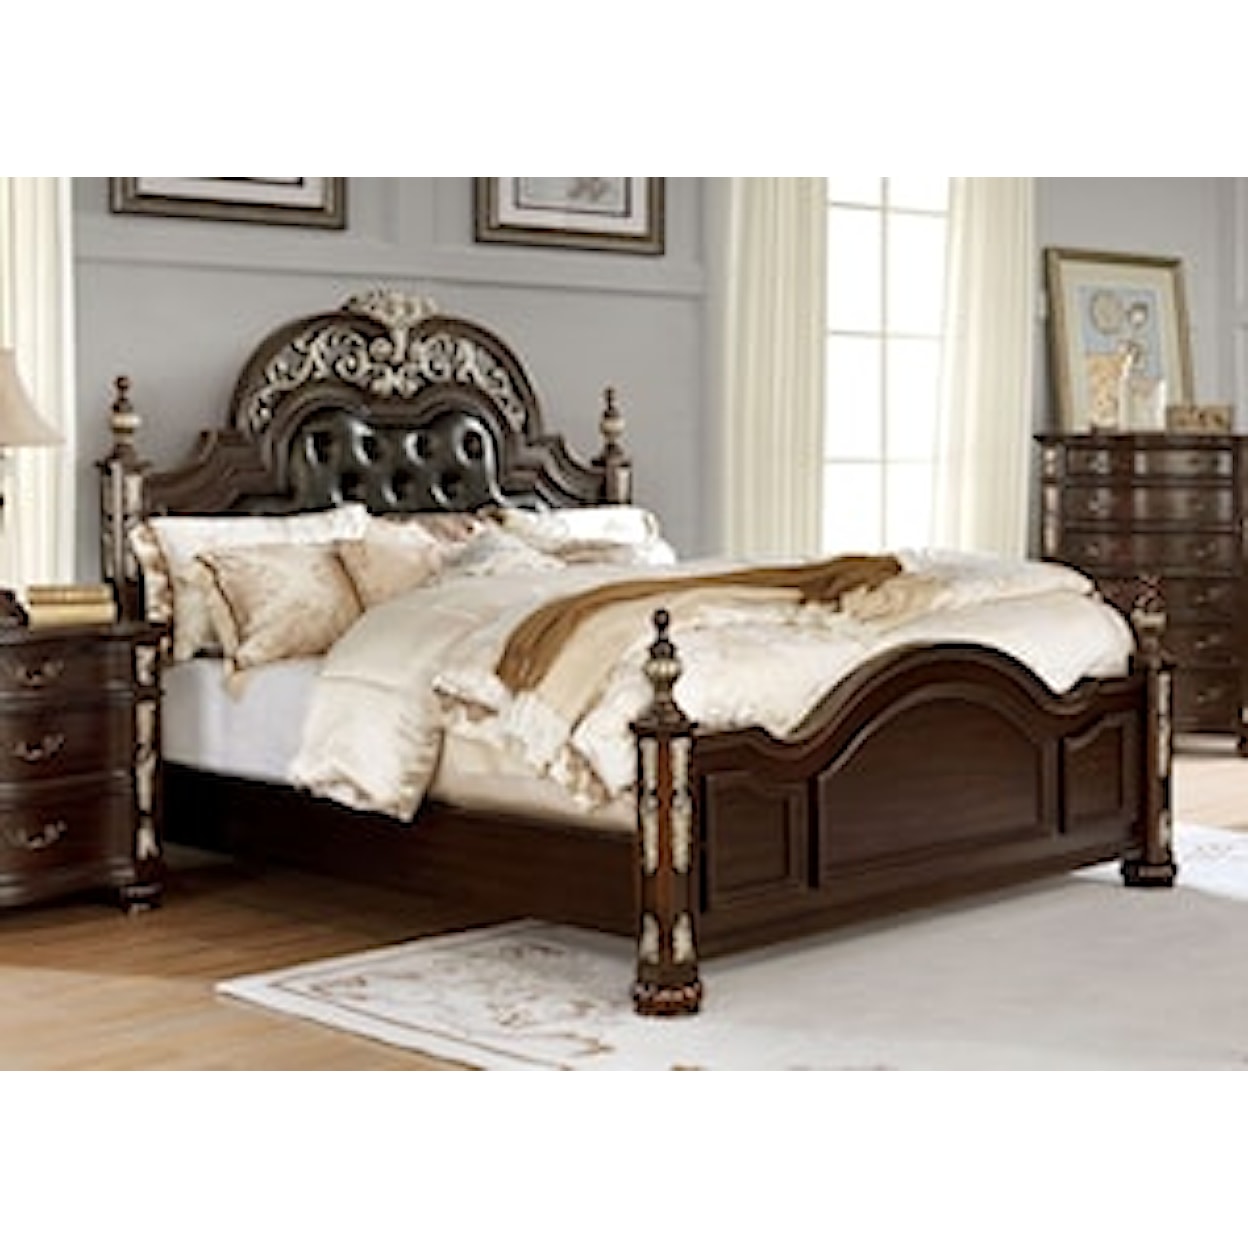 Furniture of America Theodor California King Bed